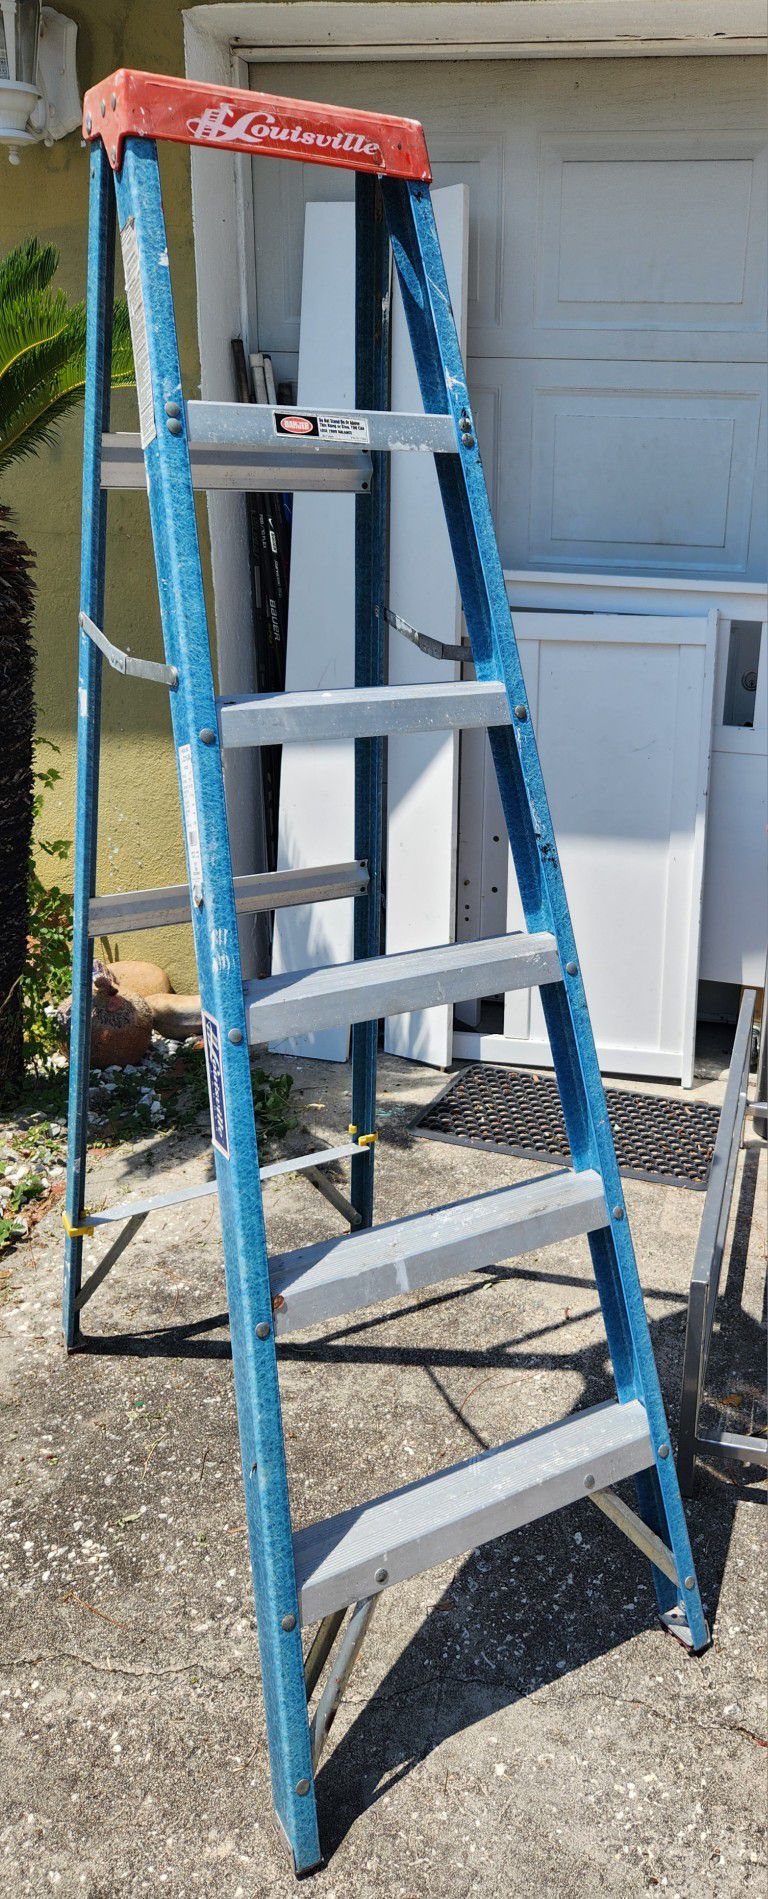 Louisville Fiberglass 6'ft Ladder, 200 Lb. Capacity, Good Working Condition 